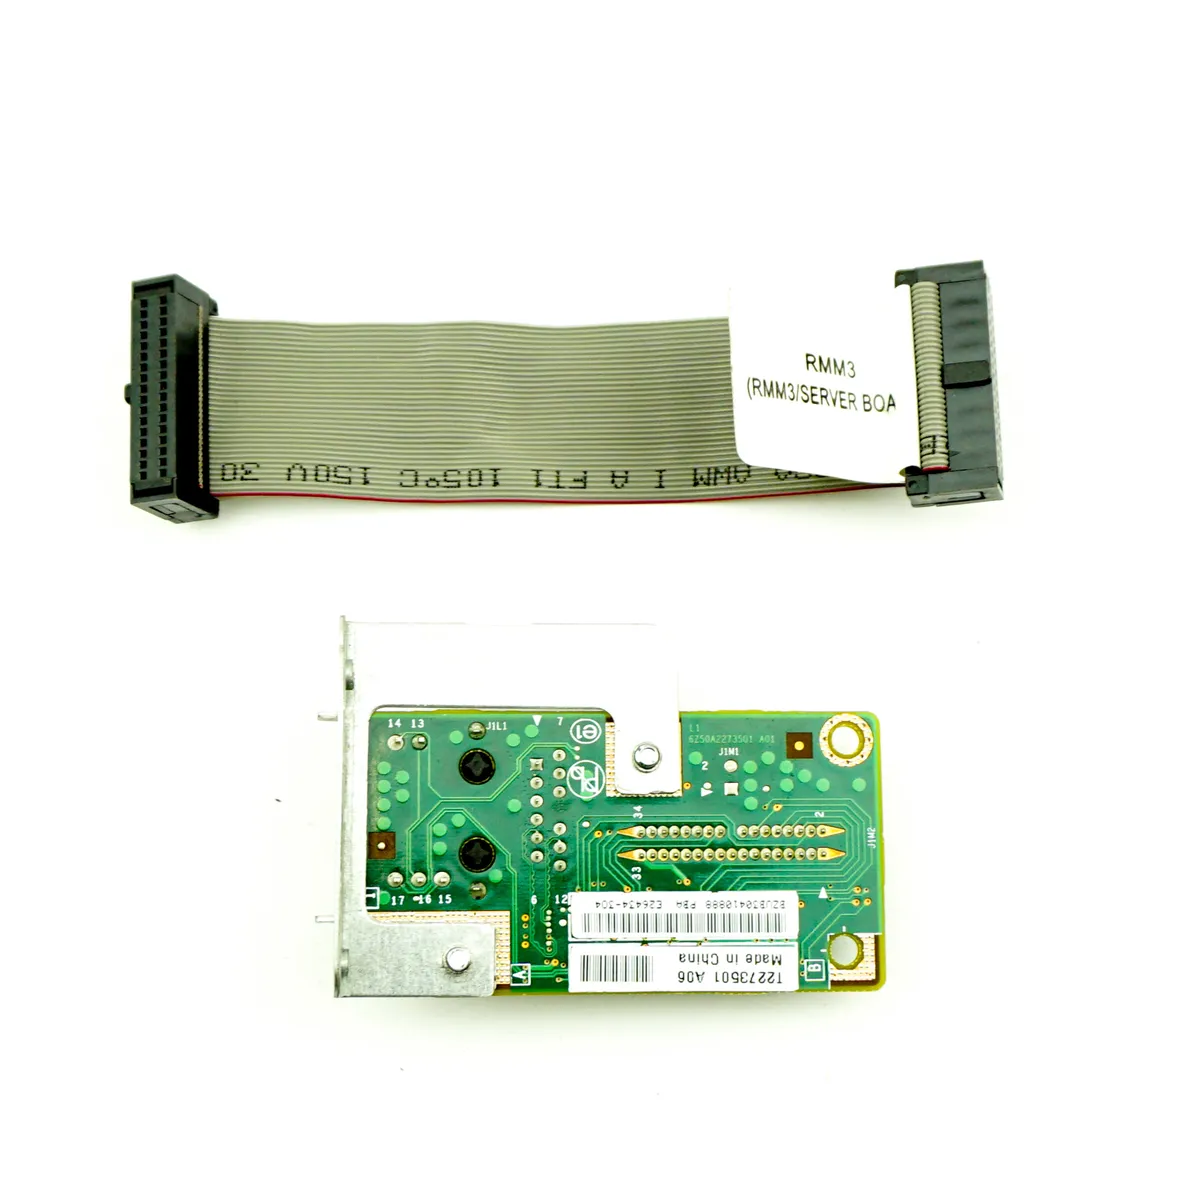 Intel iT2273501 Internal Remote Access Card